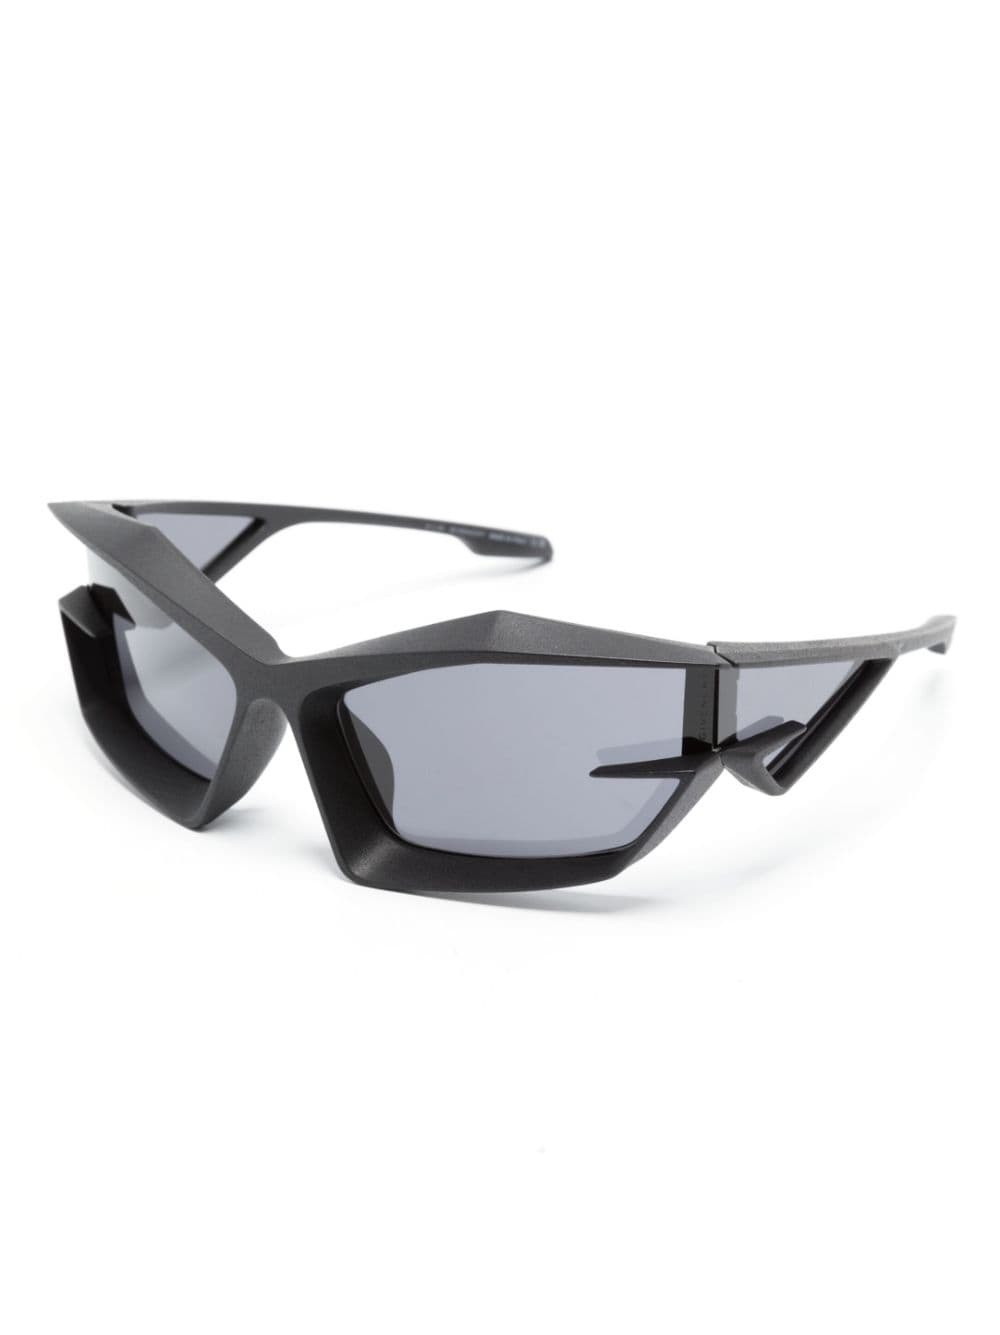 Giv Cut shield sunglasses - 2